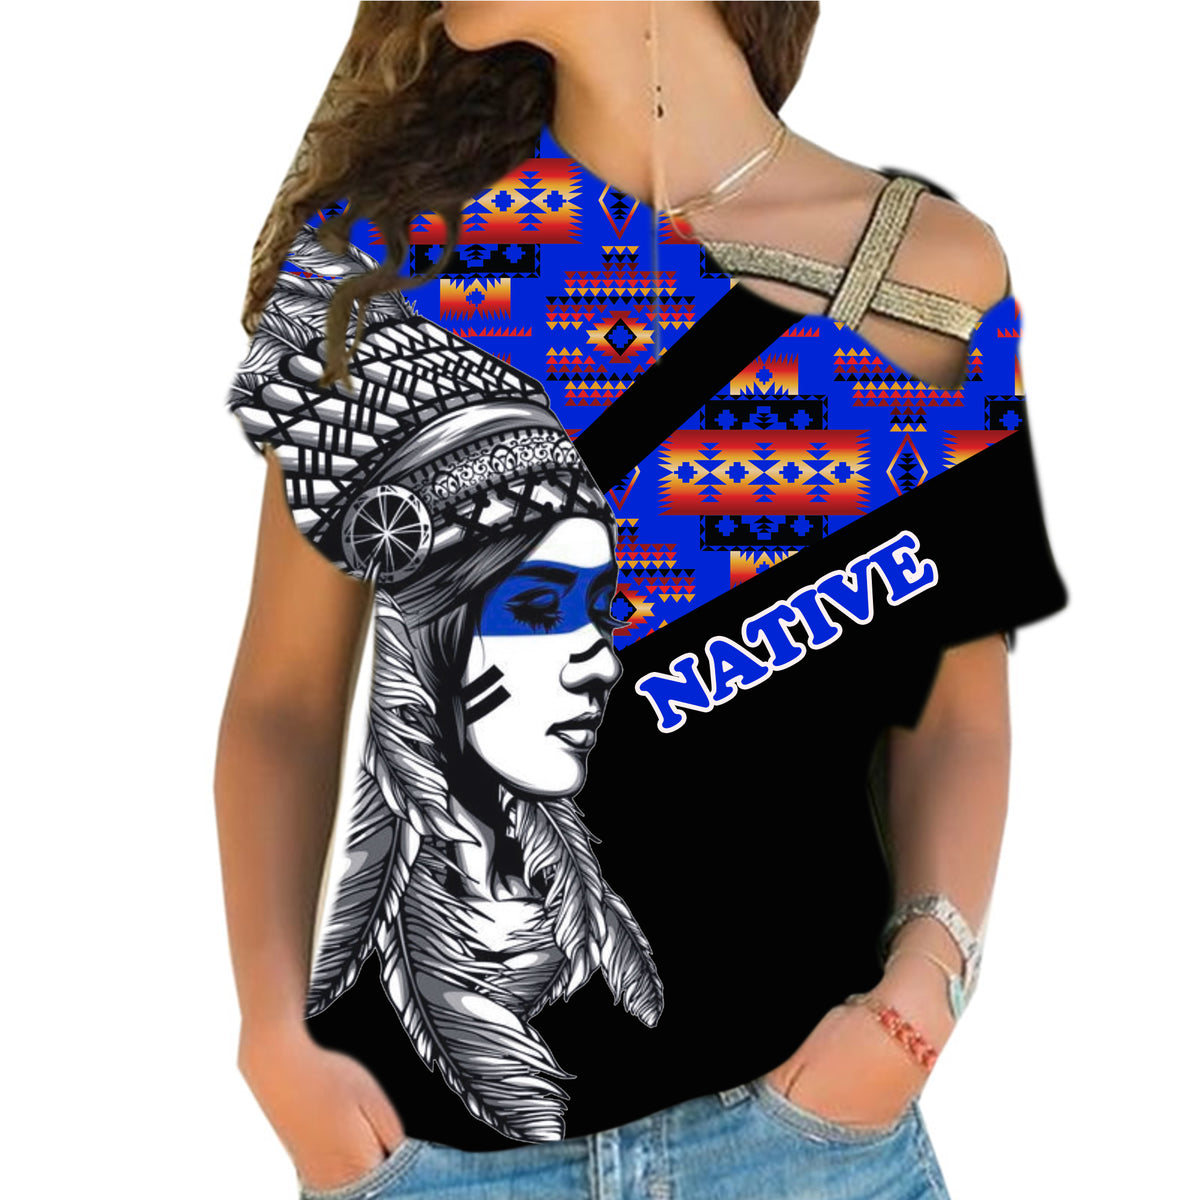 Powwow StoreCRS0001234 Native American Cross Shoulder Shirt